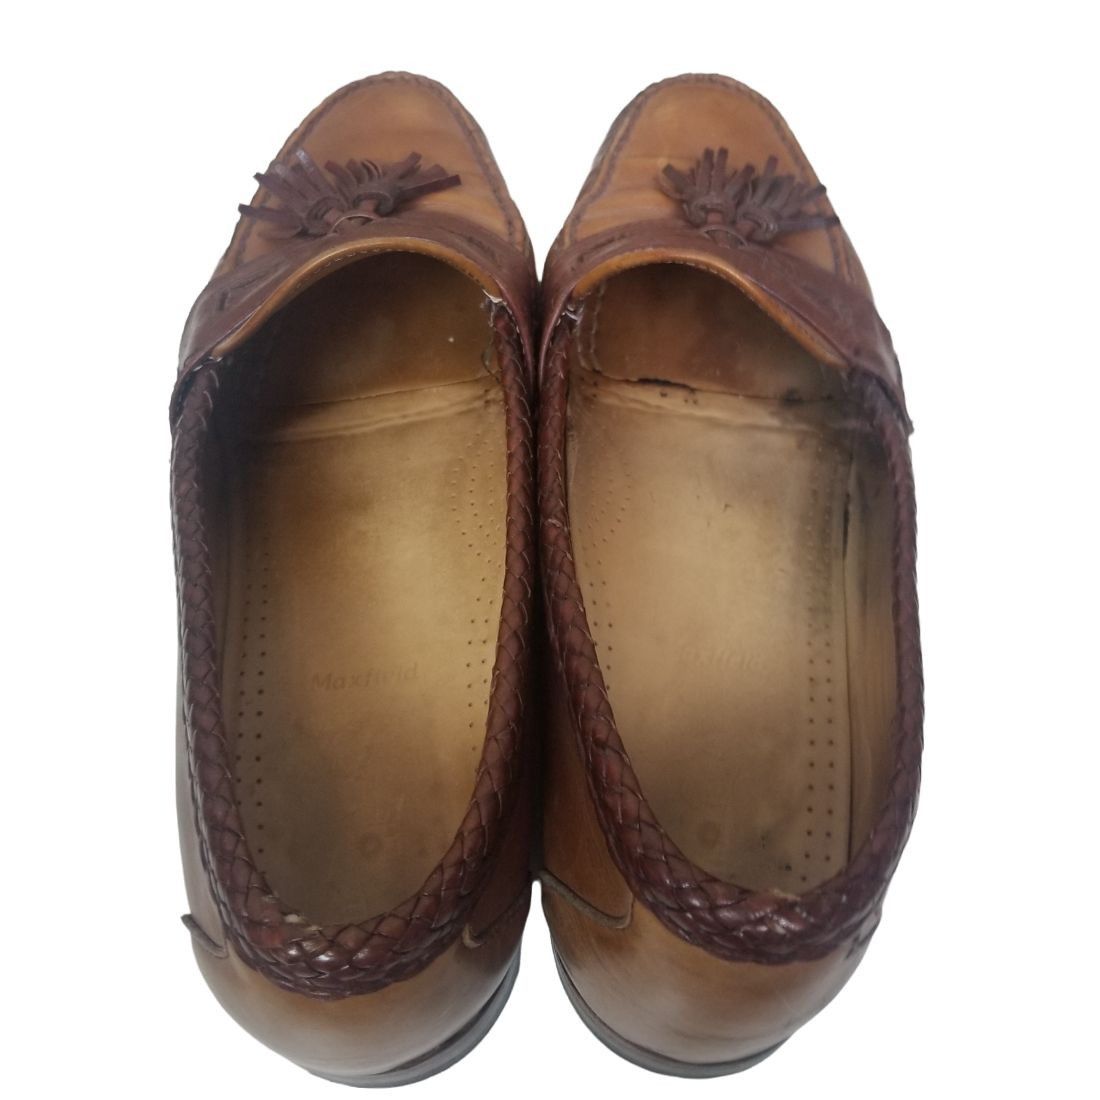 Allen Edmonds Allen Edmonds Leather Closed Toe Slip On Maxfield Loafers Size US 12 / EU 45 - 7 Thumbnail